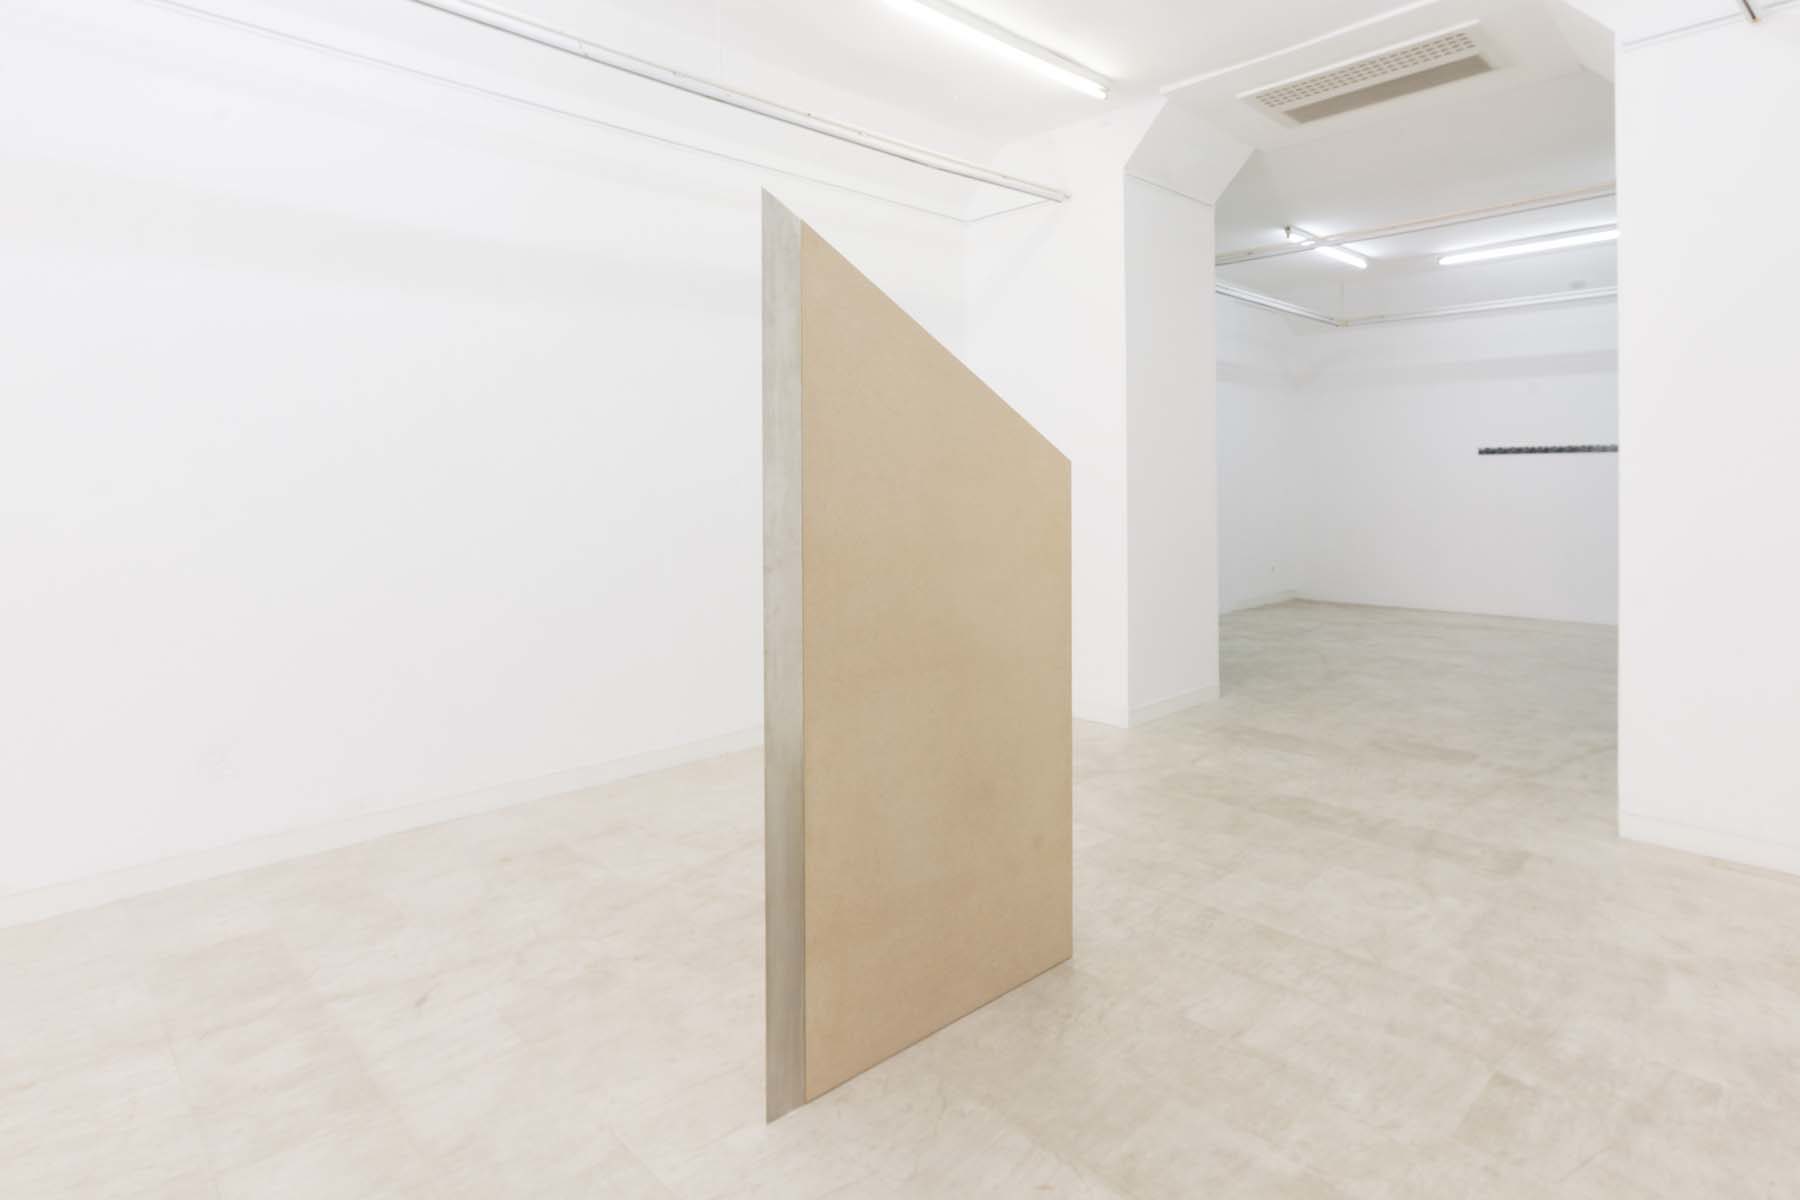 G. Morbin, L’angolo del saluto, 2006, MDF, stainless steel, 101.5 x 32.5 x 202.5 cm